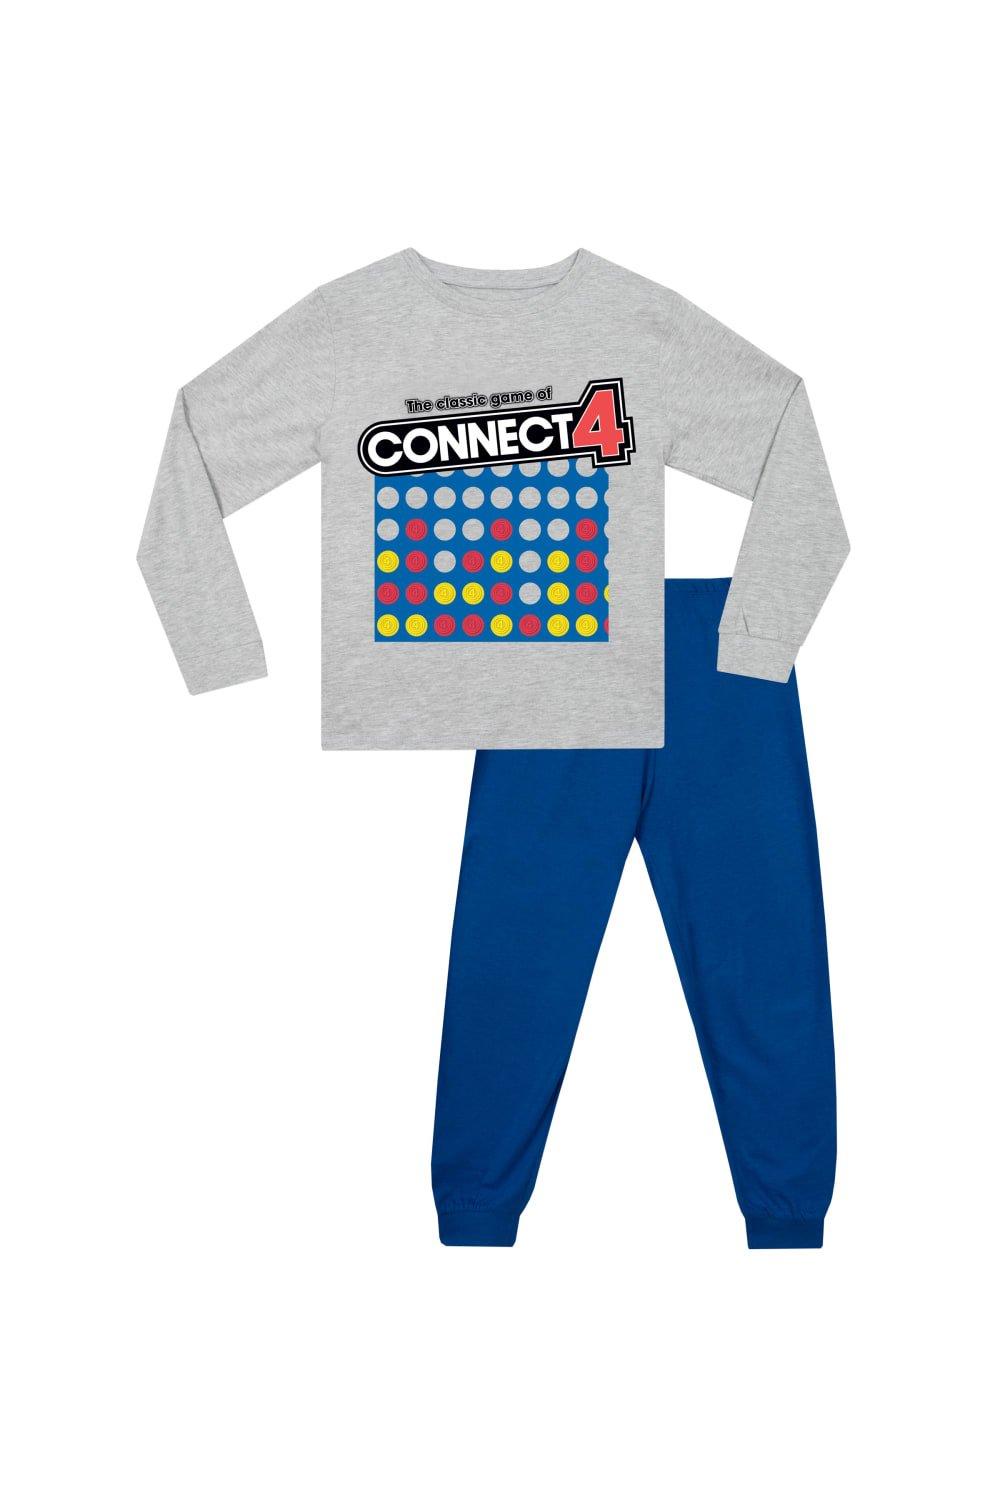 Connect 4 Pyjamas for Kids